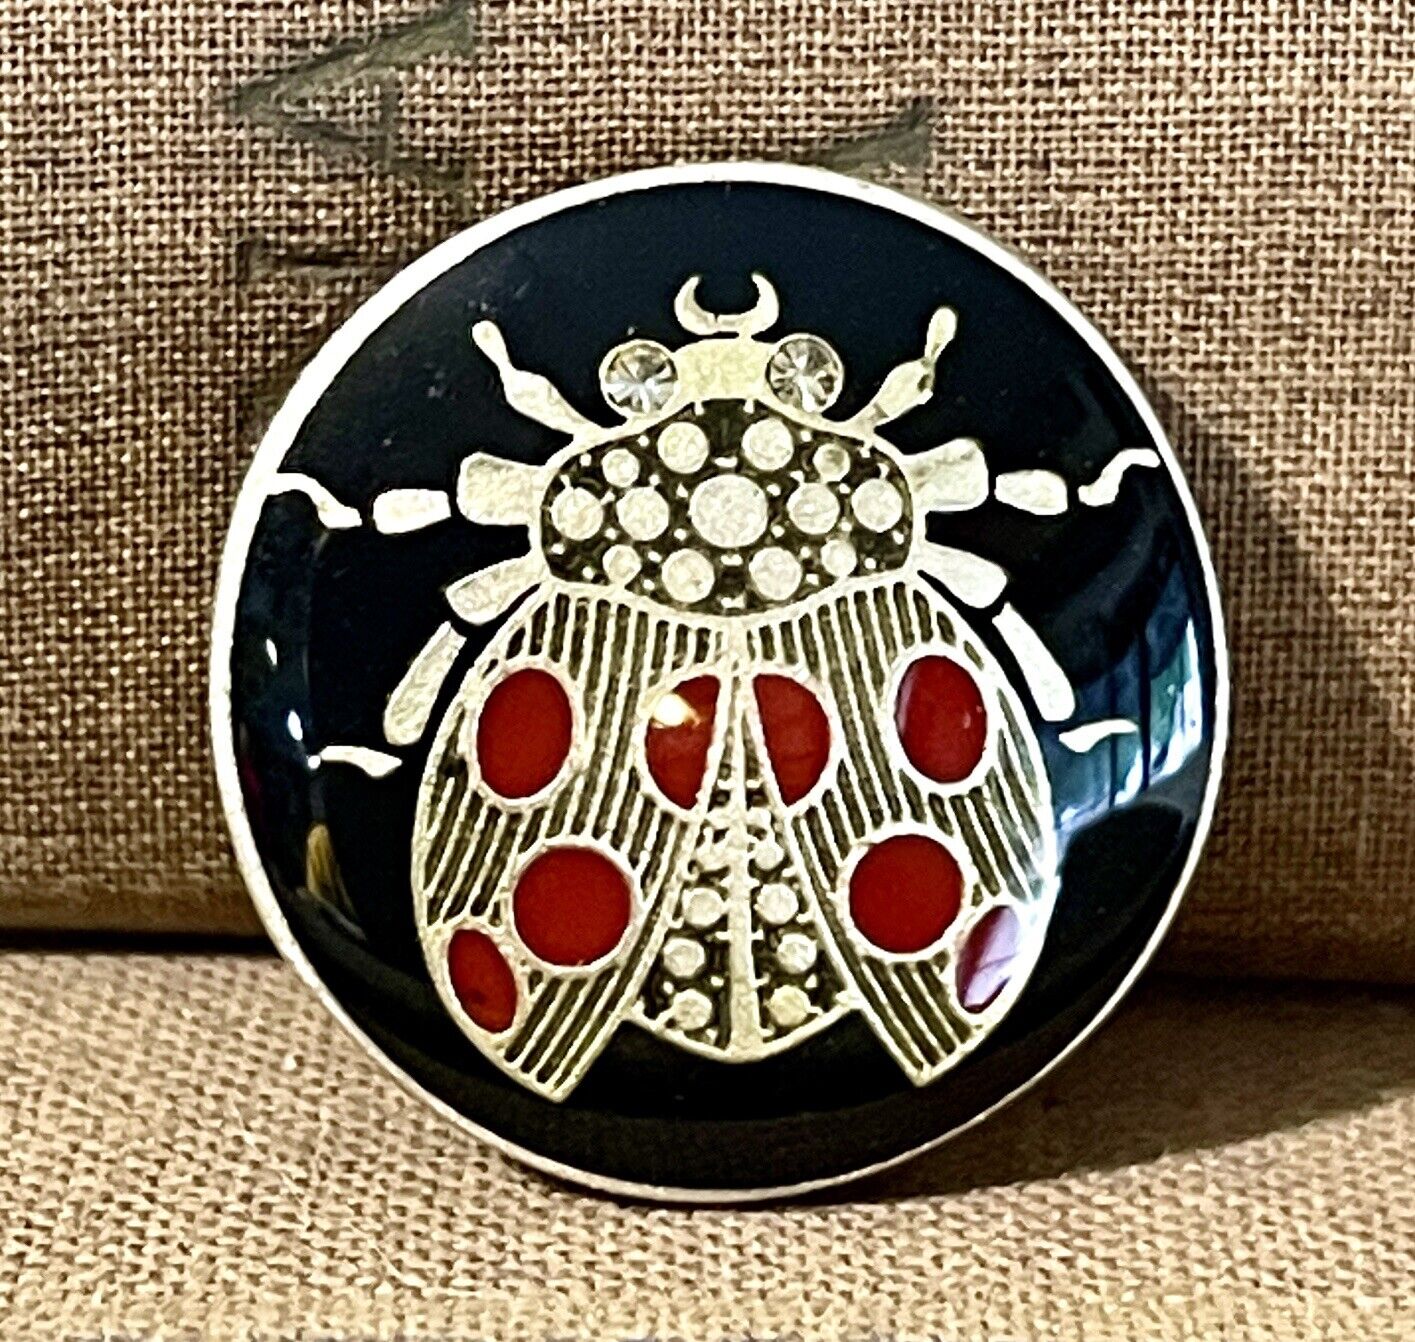 Metal Ladybug Button With Cold Enamel Finish and Rhinestone Eyes￼